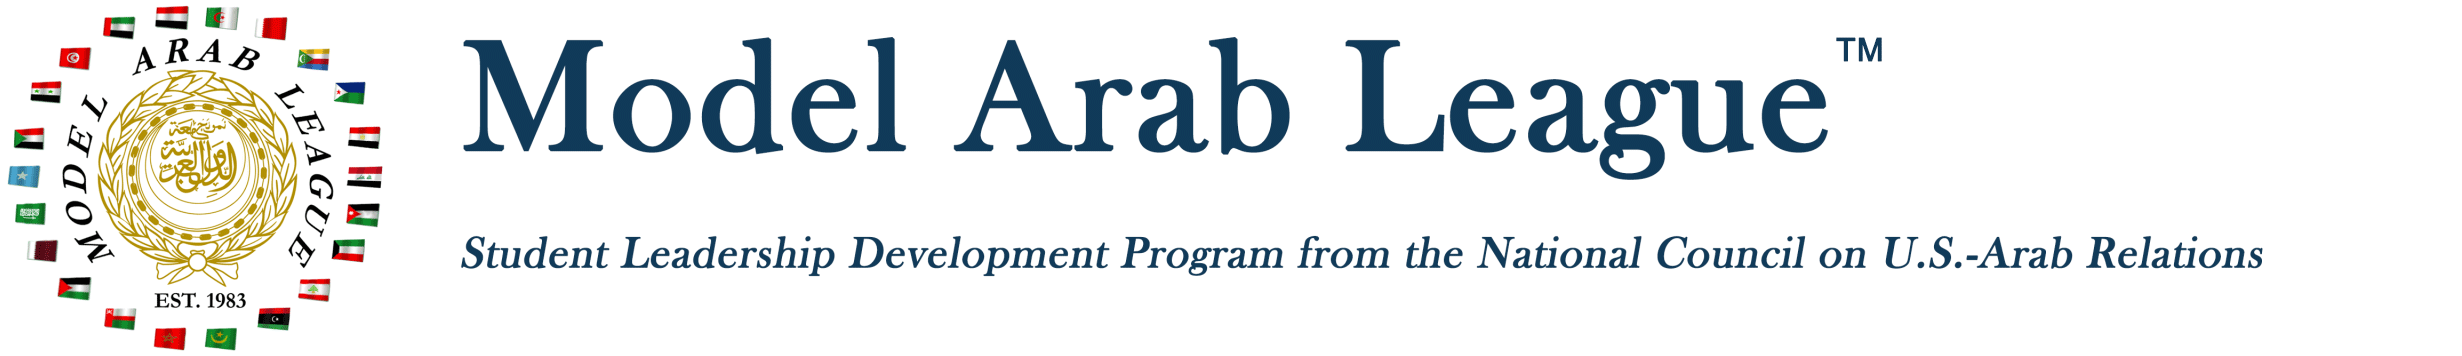 Model Arab League Youth Leadership Development Program